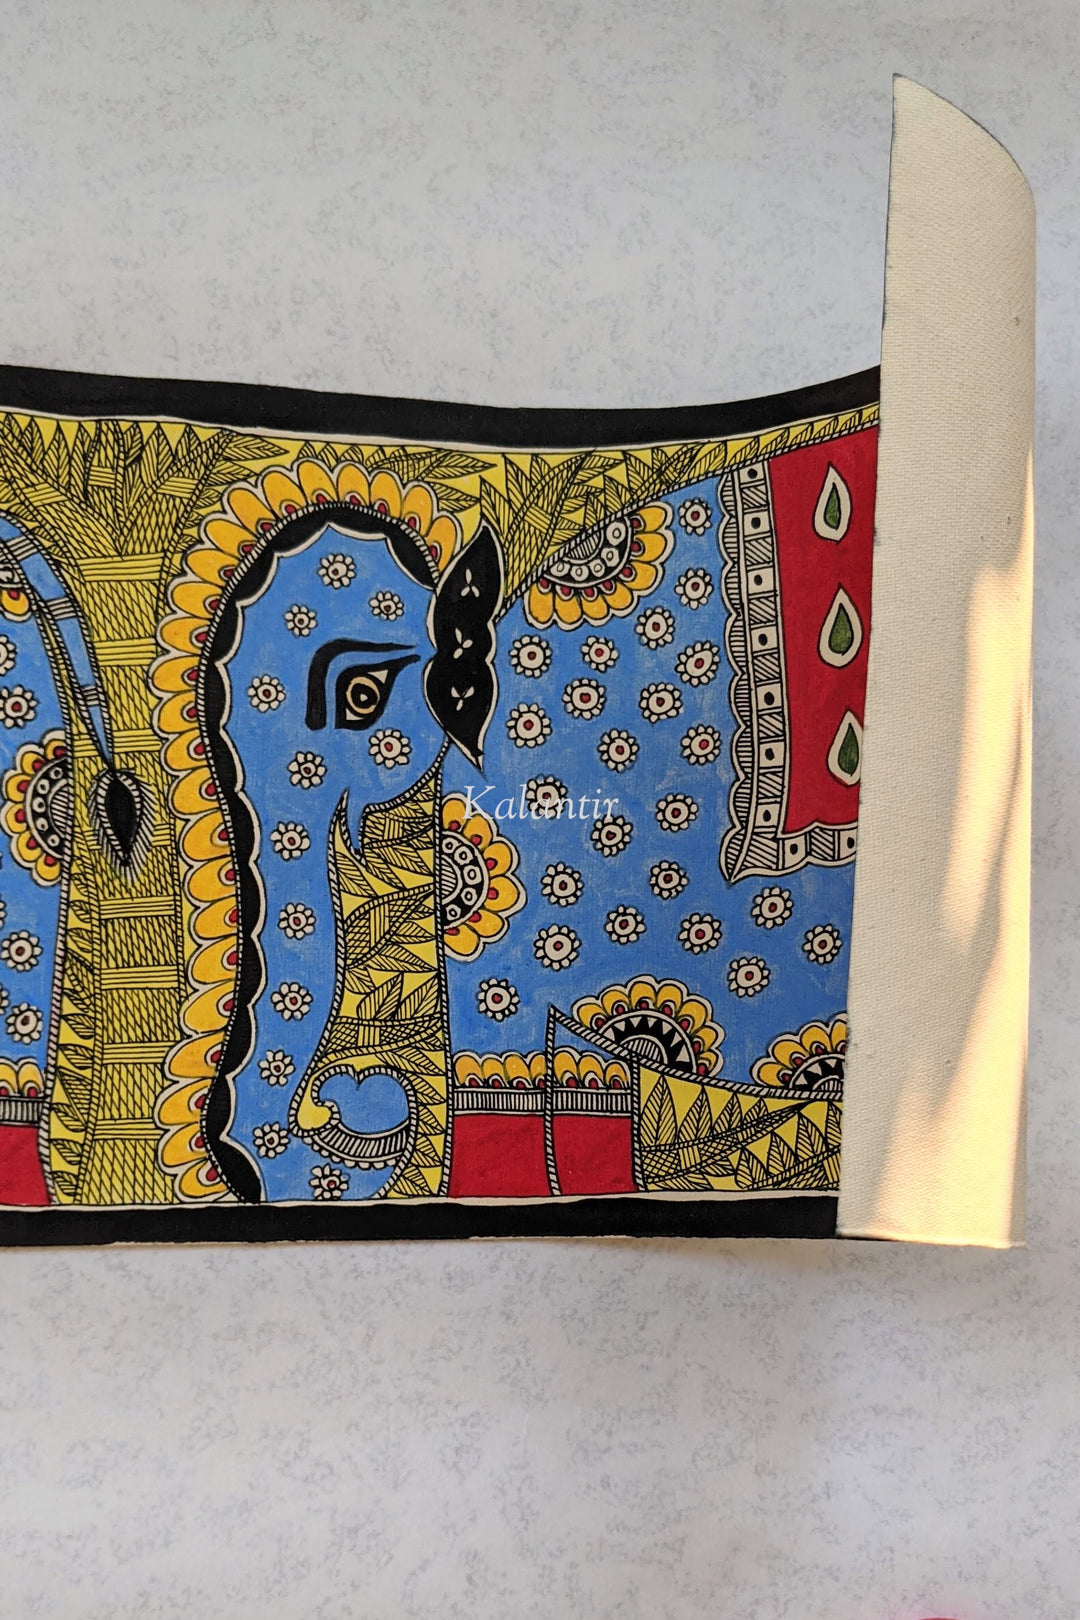 Colorful Madhubani Painting of A Pair of Elephants